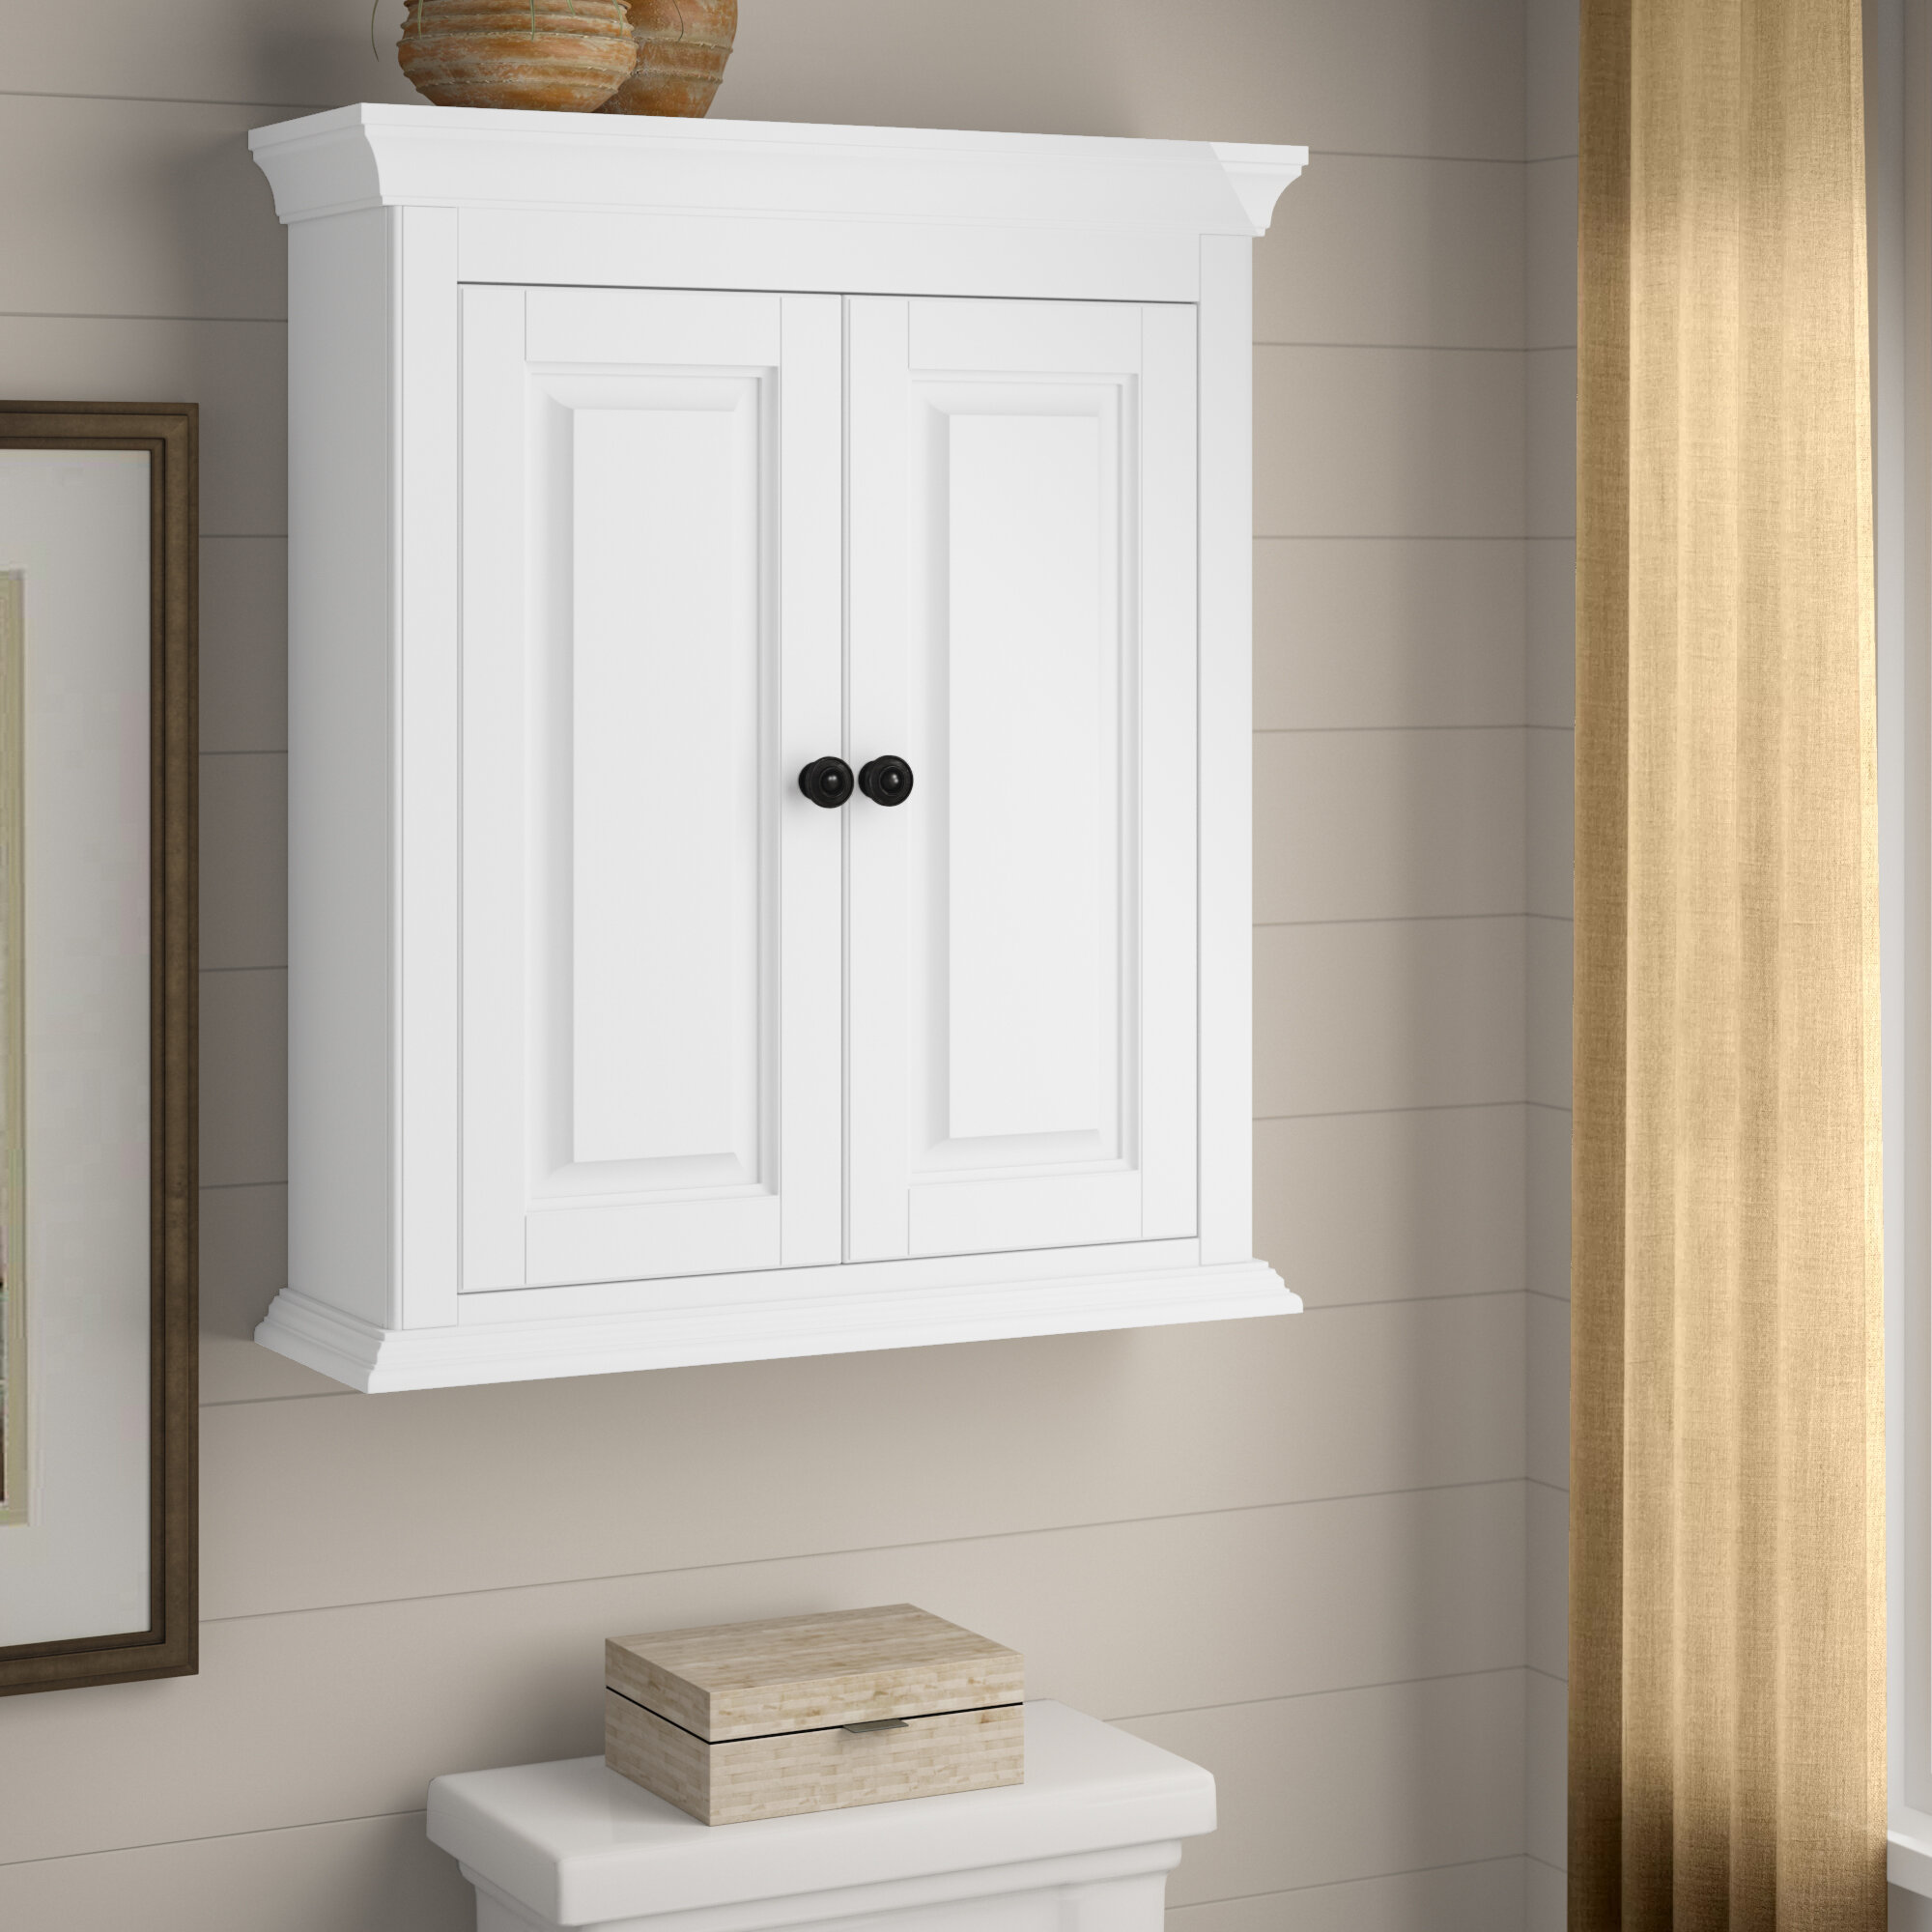 Wall Mounted Bathroom Cabinets - Foter